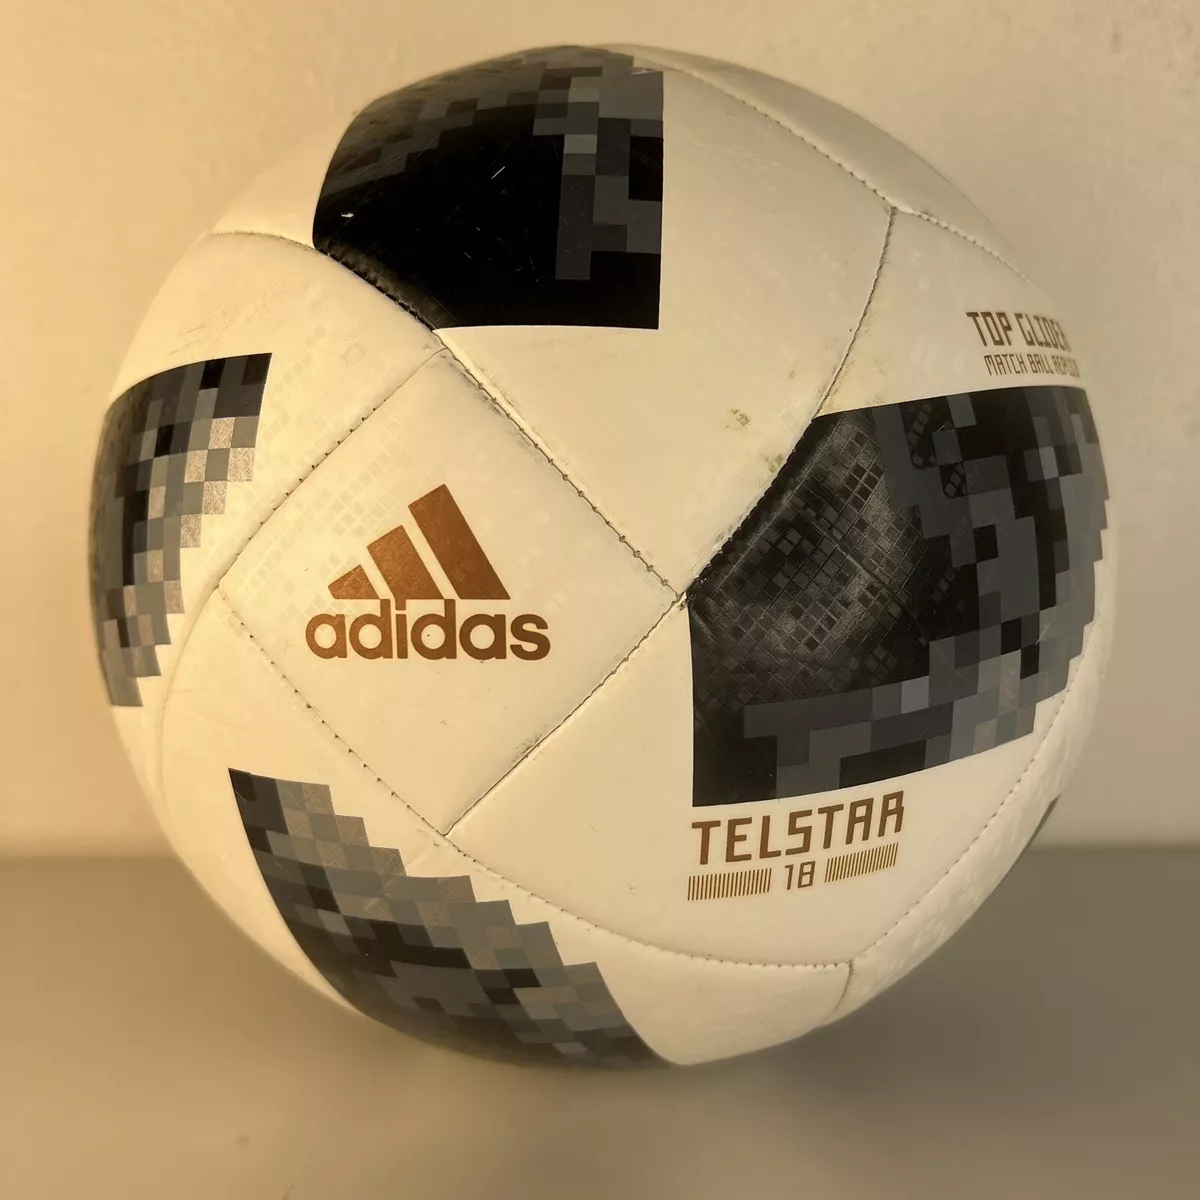 Adidas FIFA World Cup Russia 2018 Glider Match Ball Replica Size 5